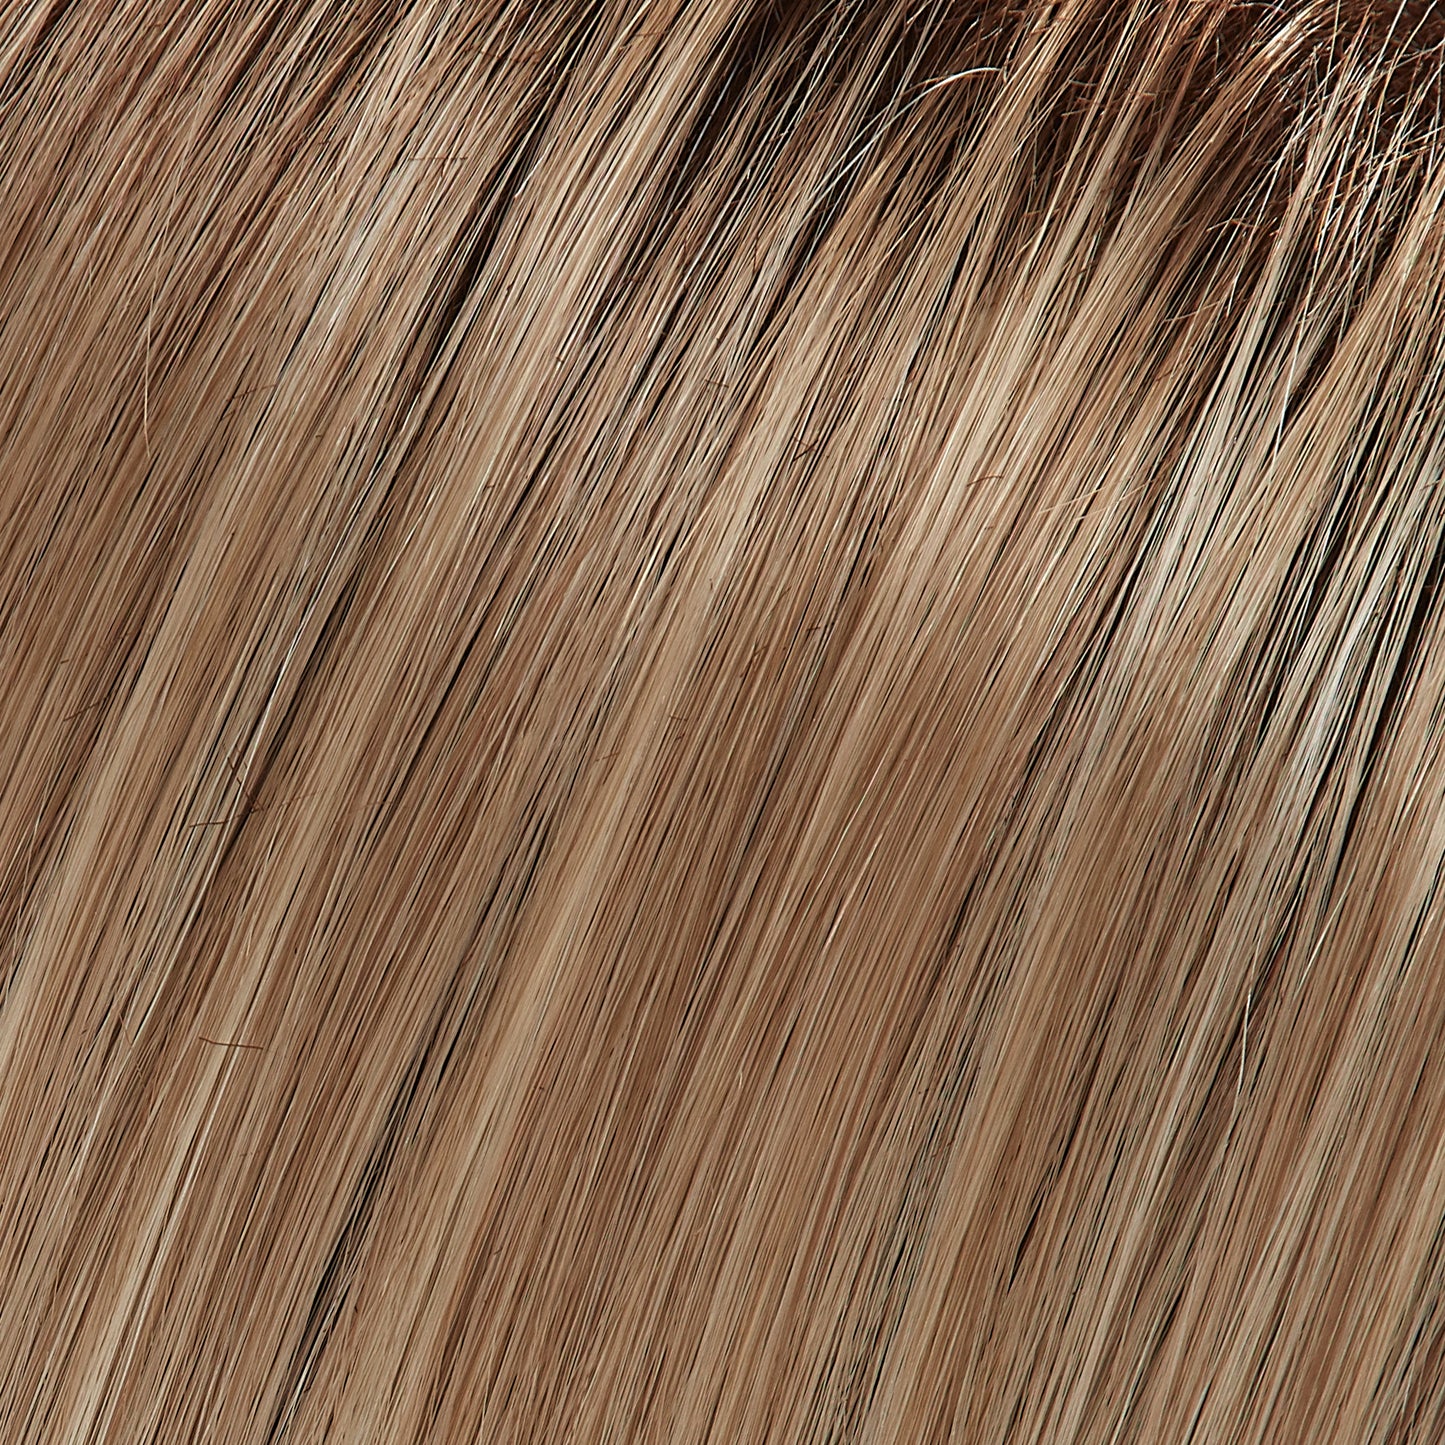 Carrie Lite Petite Human Hair - Jon Renau Smartlace Lite.